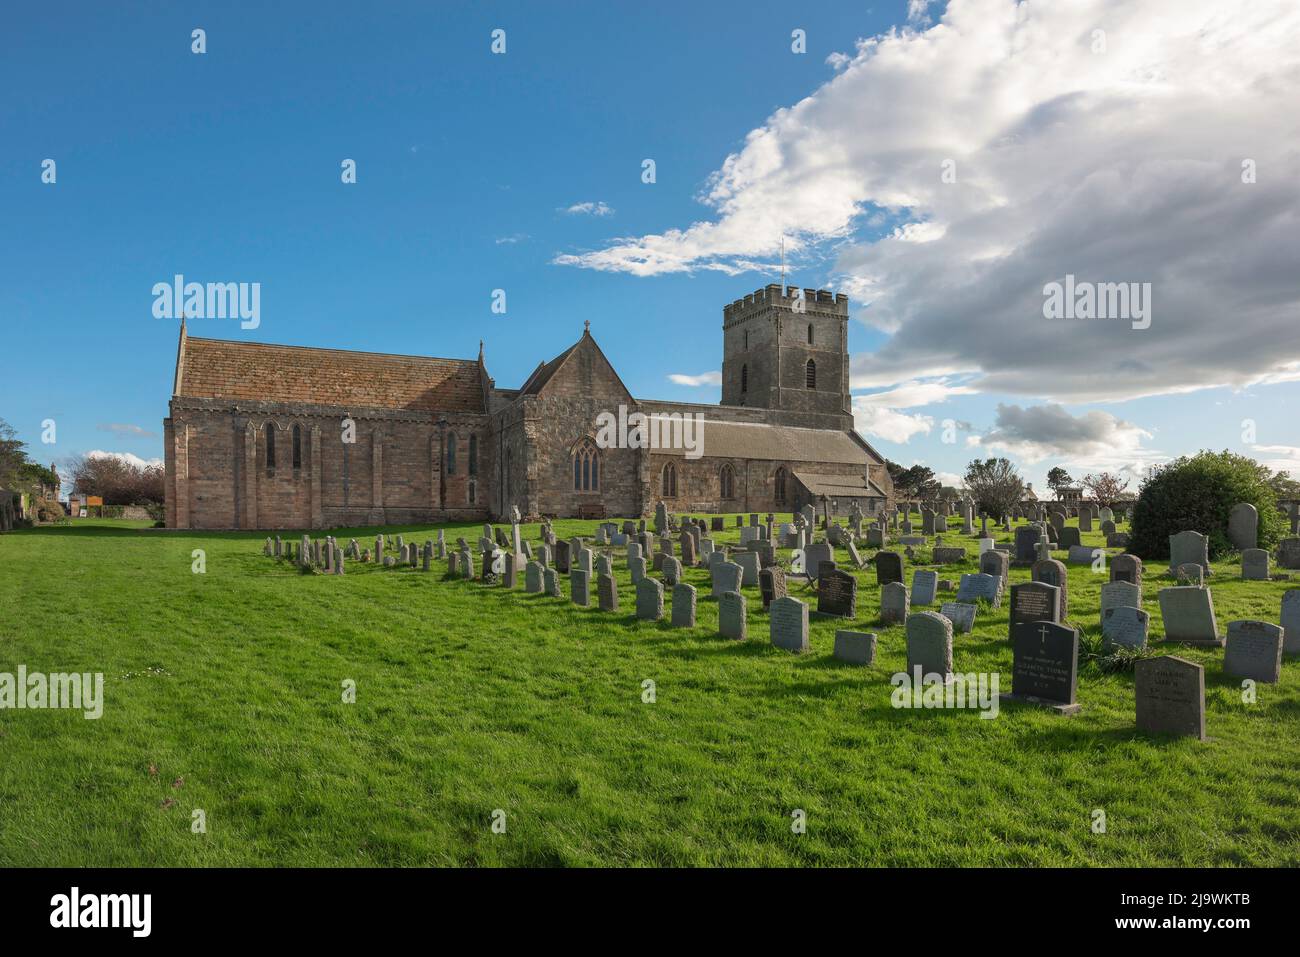 St Aidan's Church Bamburgh, view of the 12th century church and scenic churchyard in the Northumberland coastal village of Bamburgh, England, UK Stock Photo